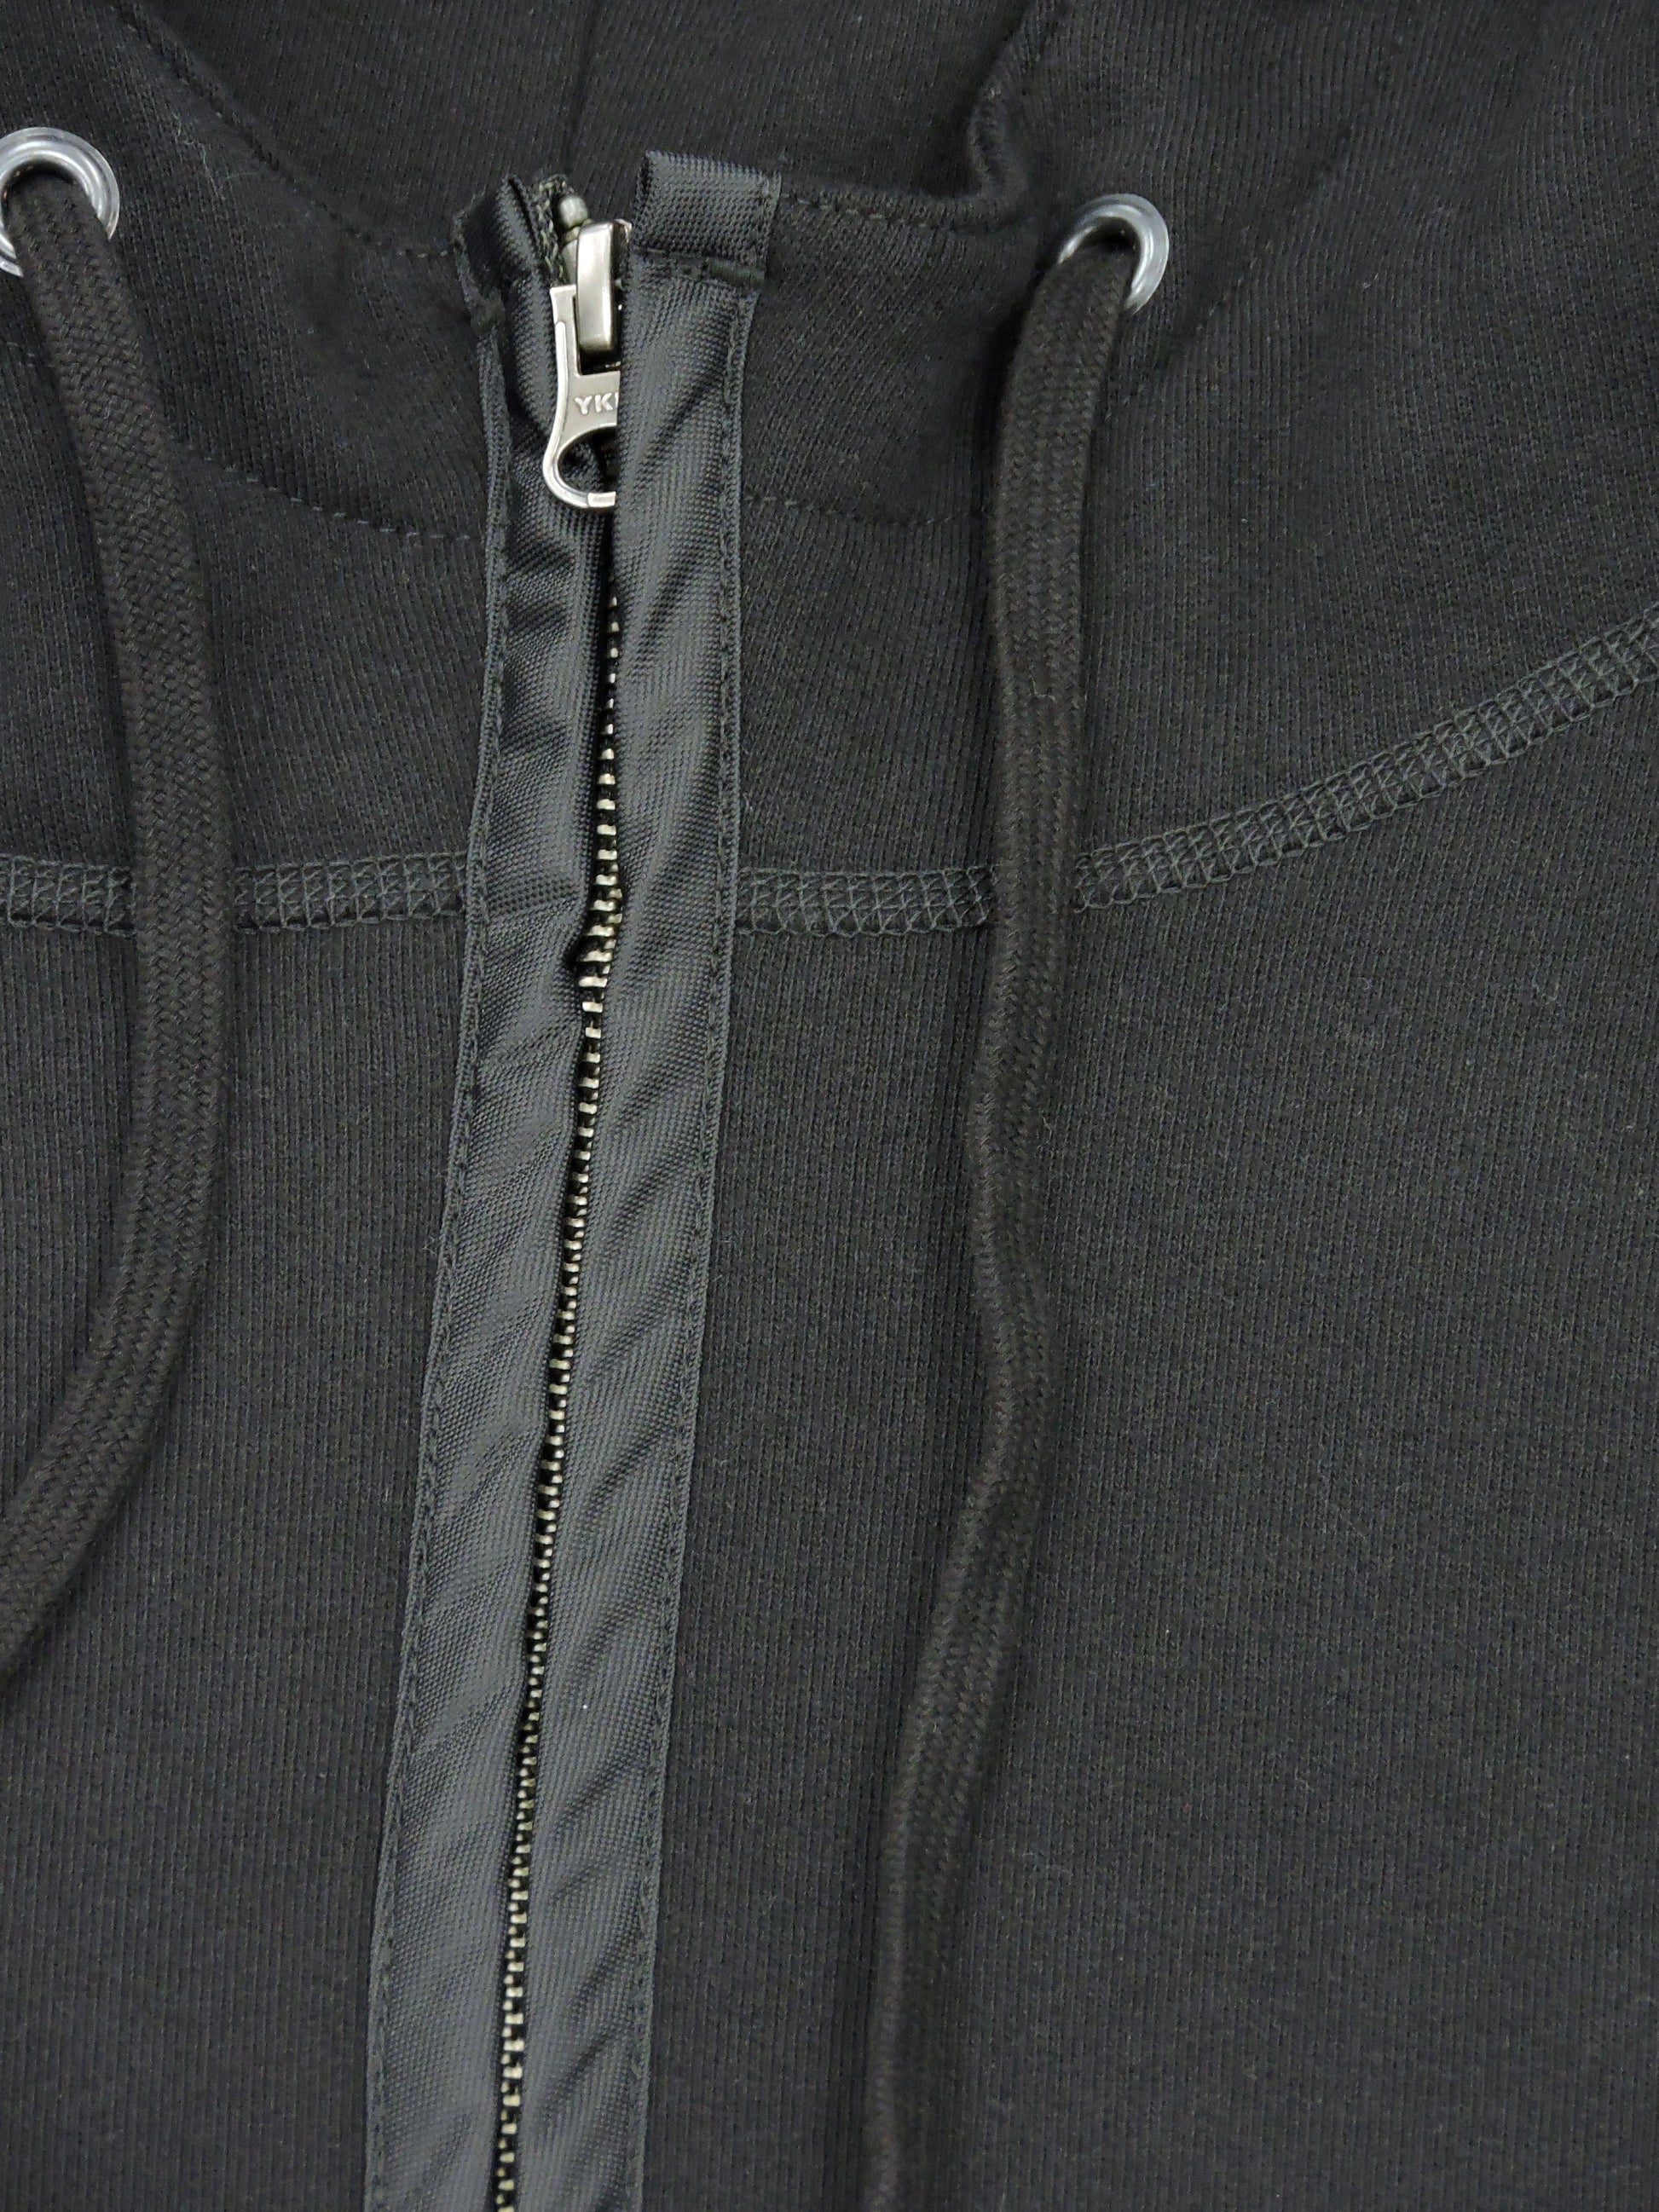 Close up of zipper, drawstrings, and fleece material.